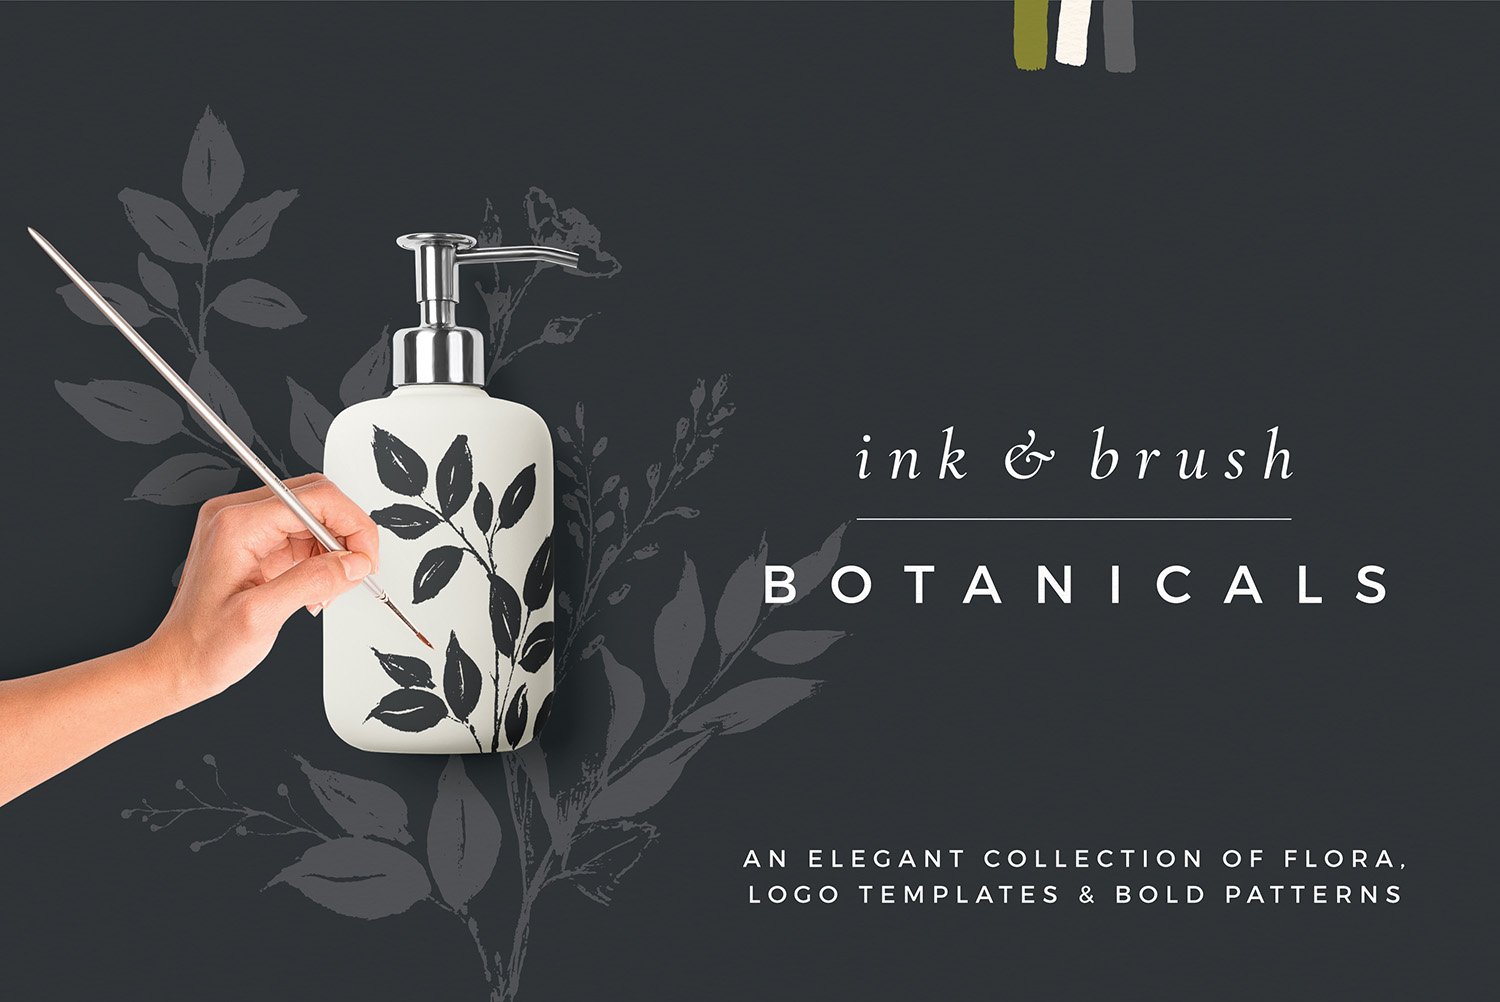 Ink botanicals, logos & patterns cover image.